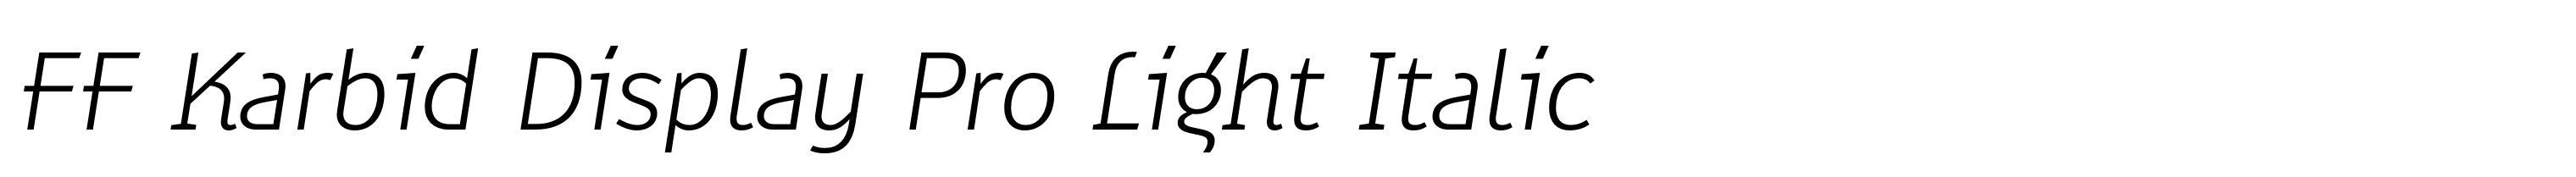 FF Karbid Display Pro Light Italic